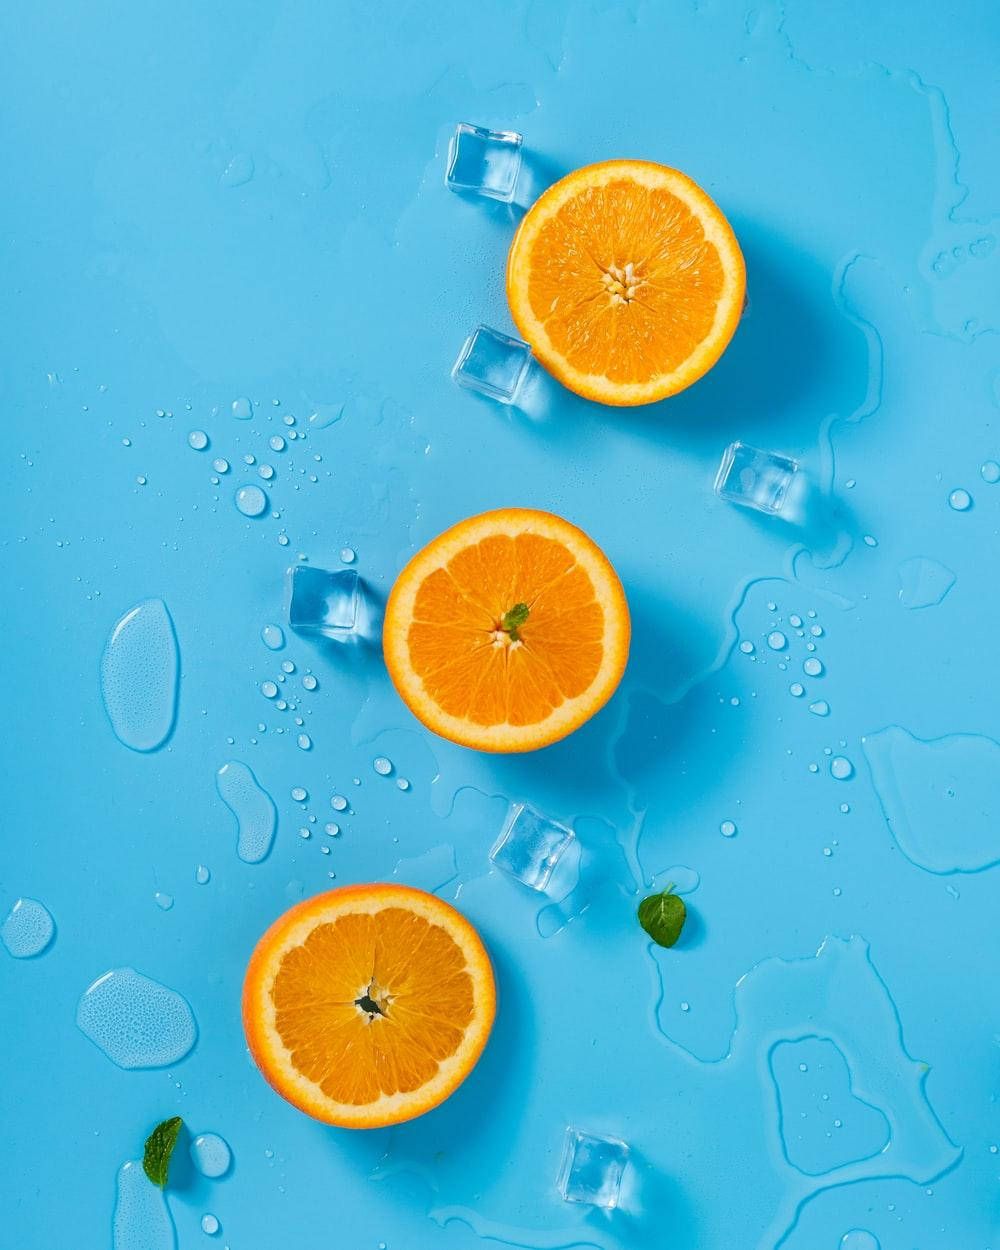 Sliced oranges on a blue background with ice cubes - Pastel orange